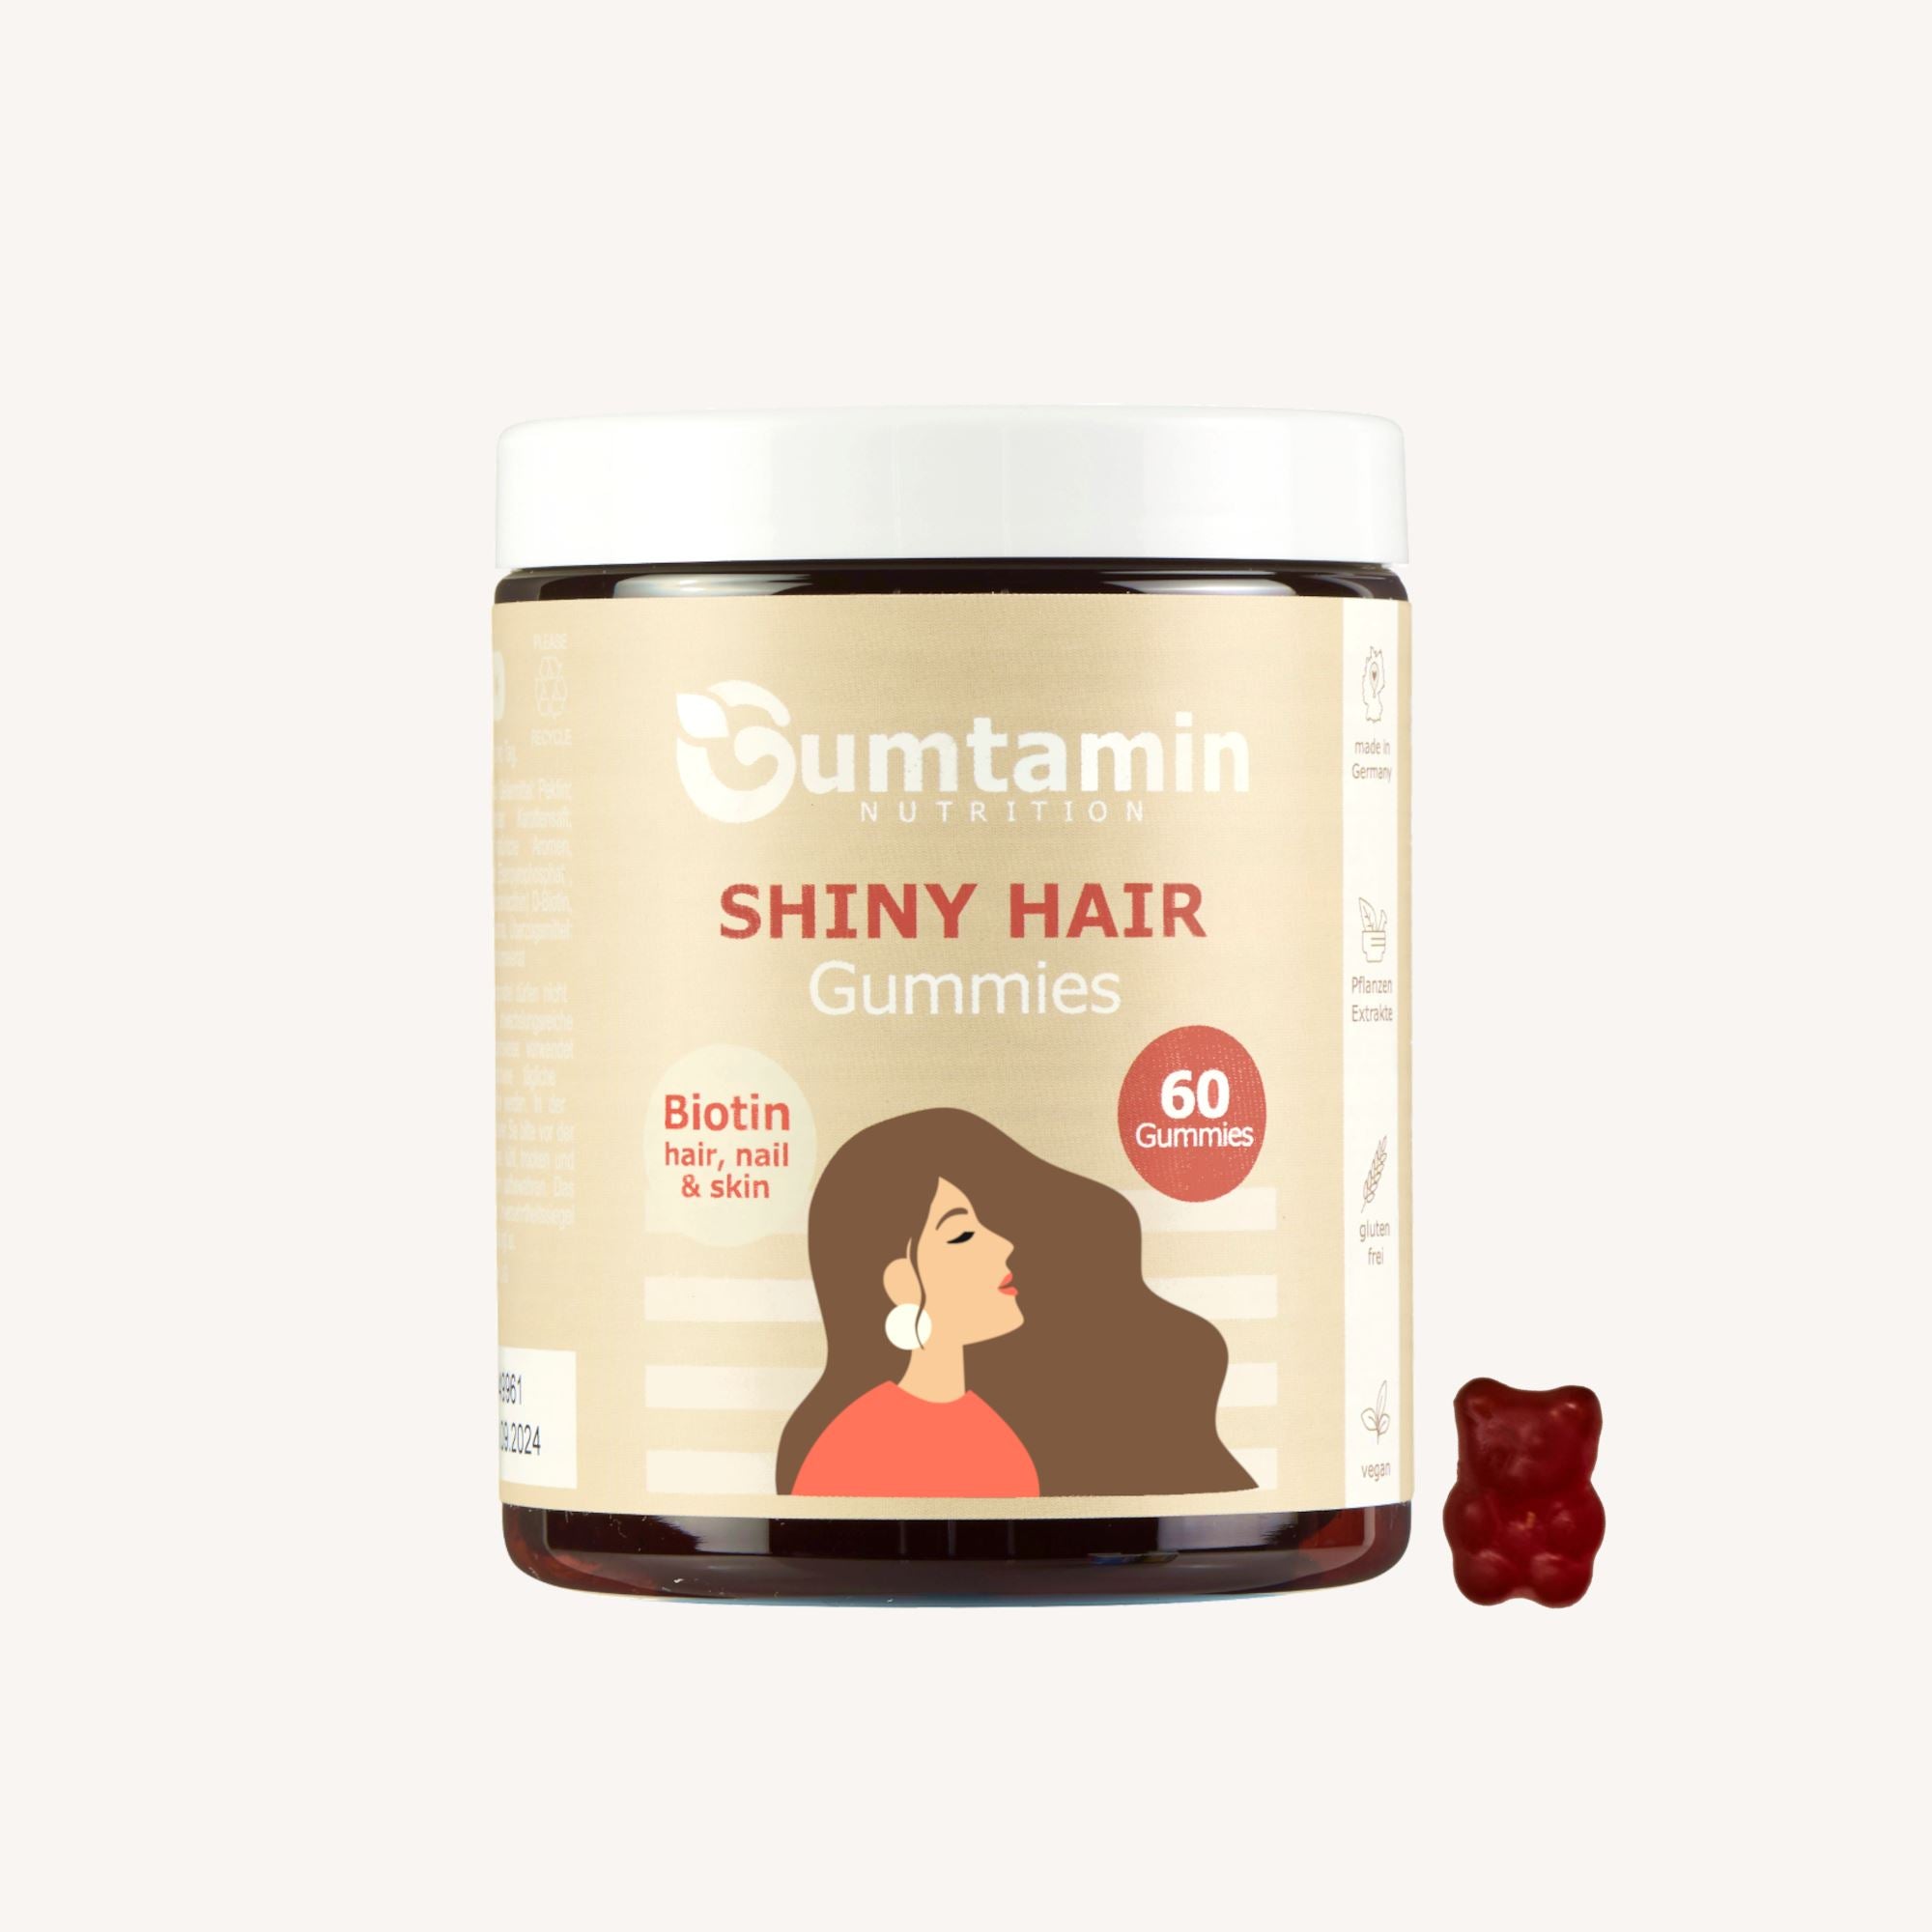 Shiny Hair Gummies gumtamin 1x 60 Stück 